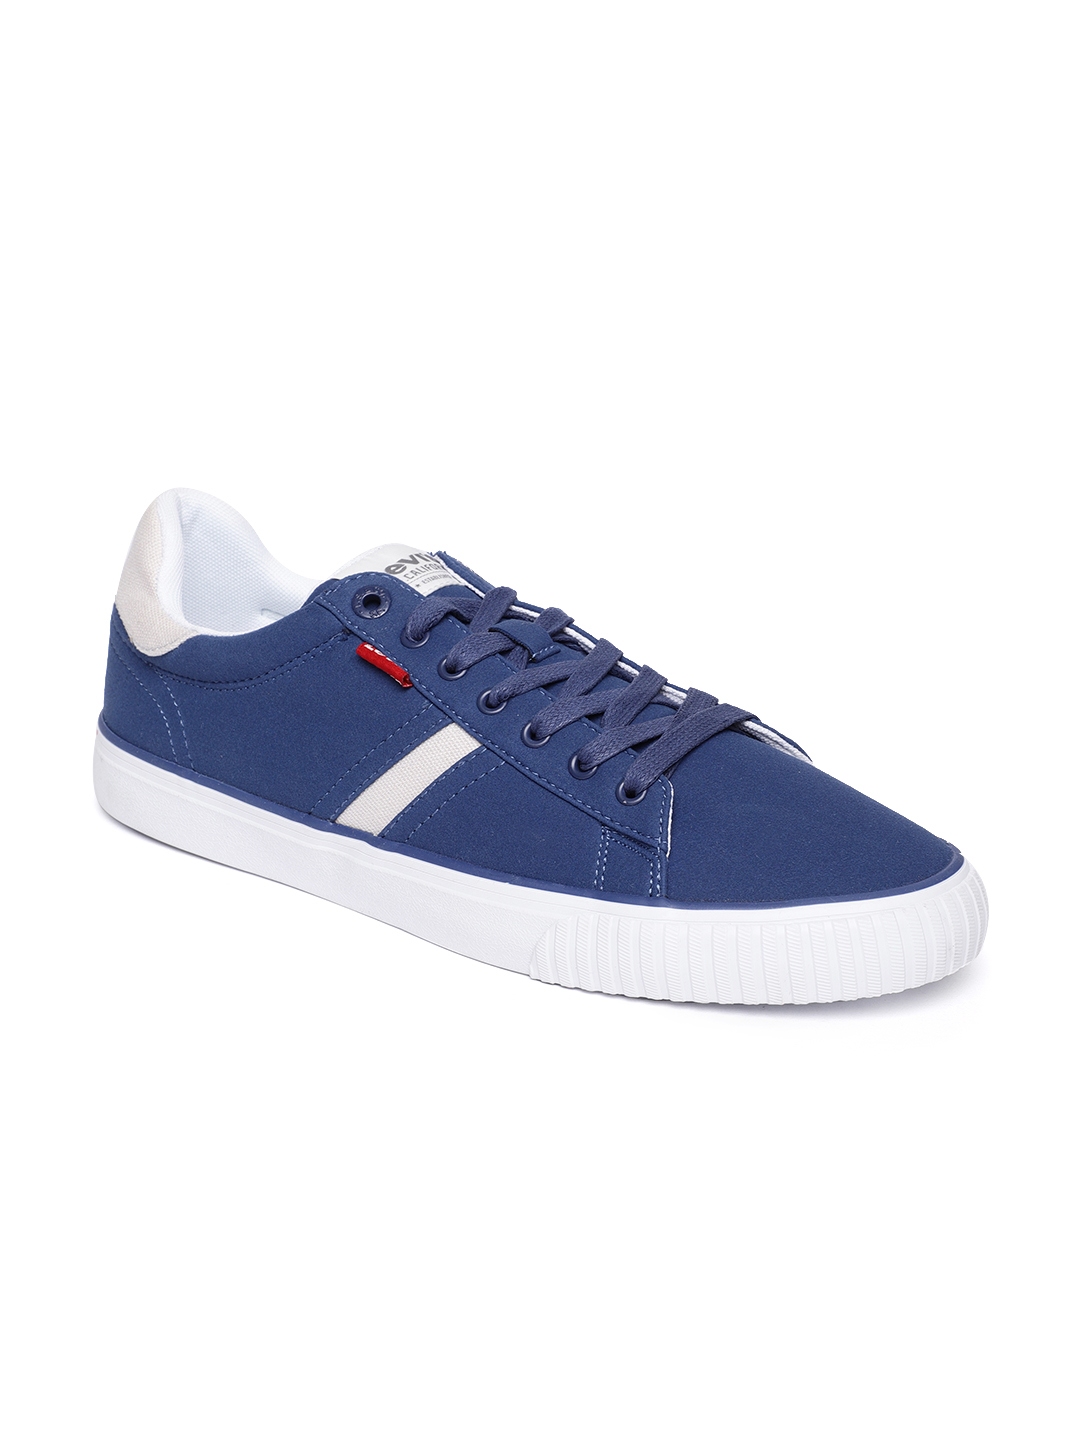 Buy Levis Men Blue Sneakers - Casual Shoes for Men 9036031 | Myntra